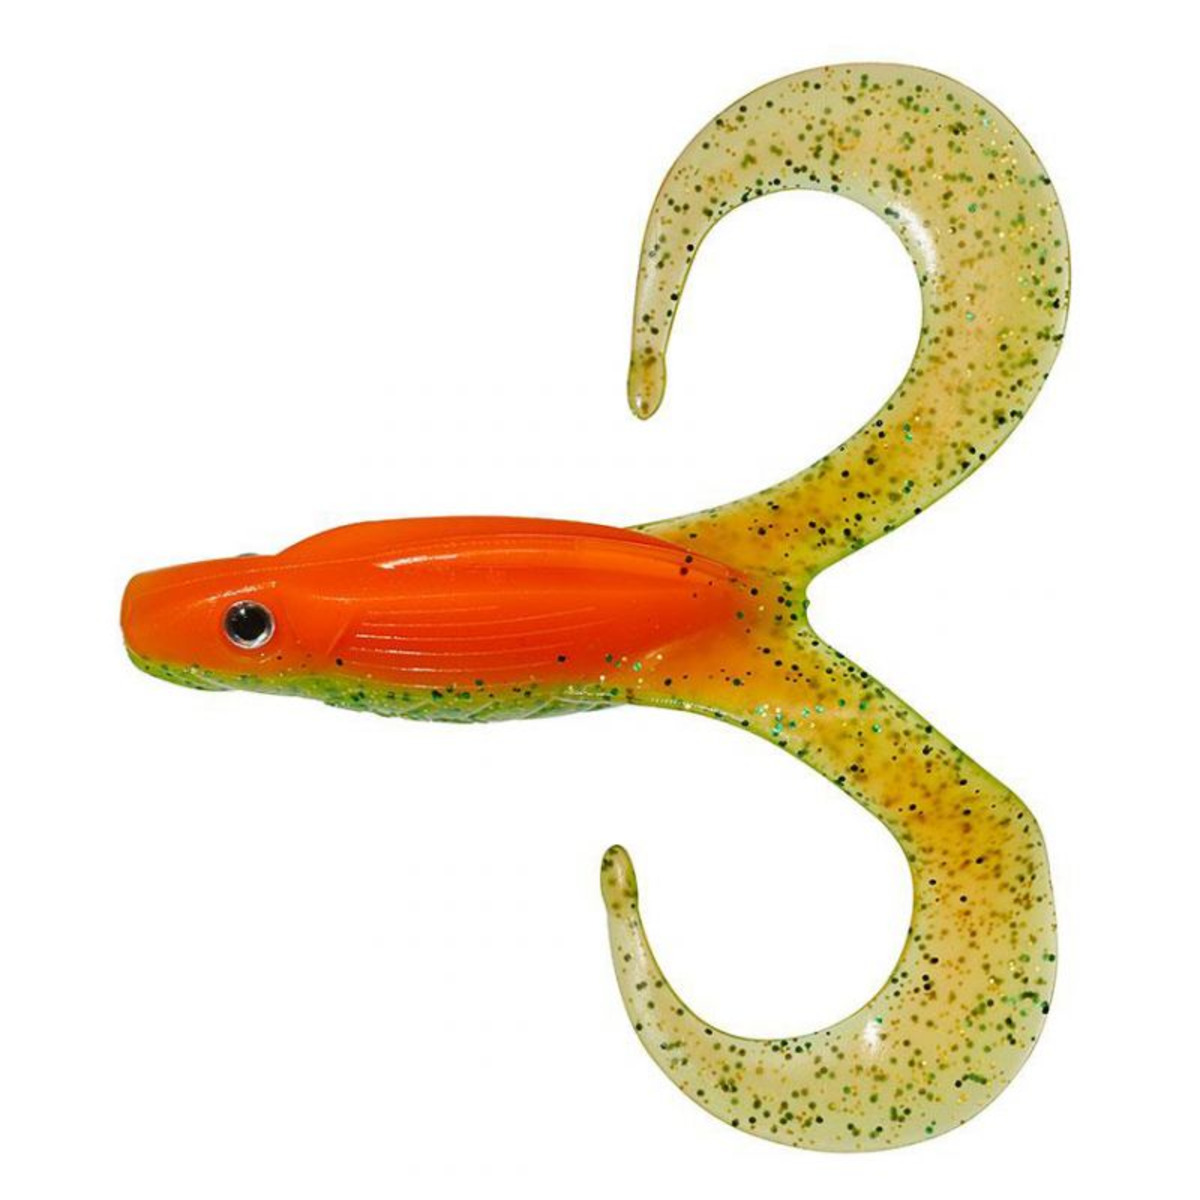 Gunki Ls Grubby Frog - 18.1 g - 12 cm - Orange Chart Belly